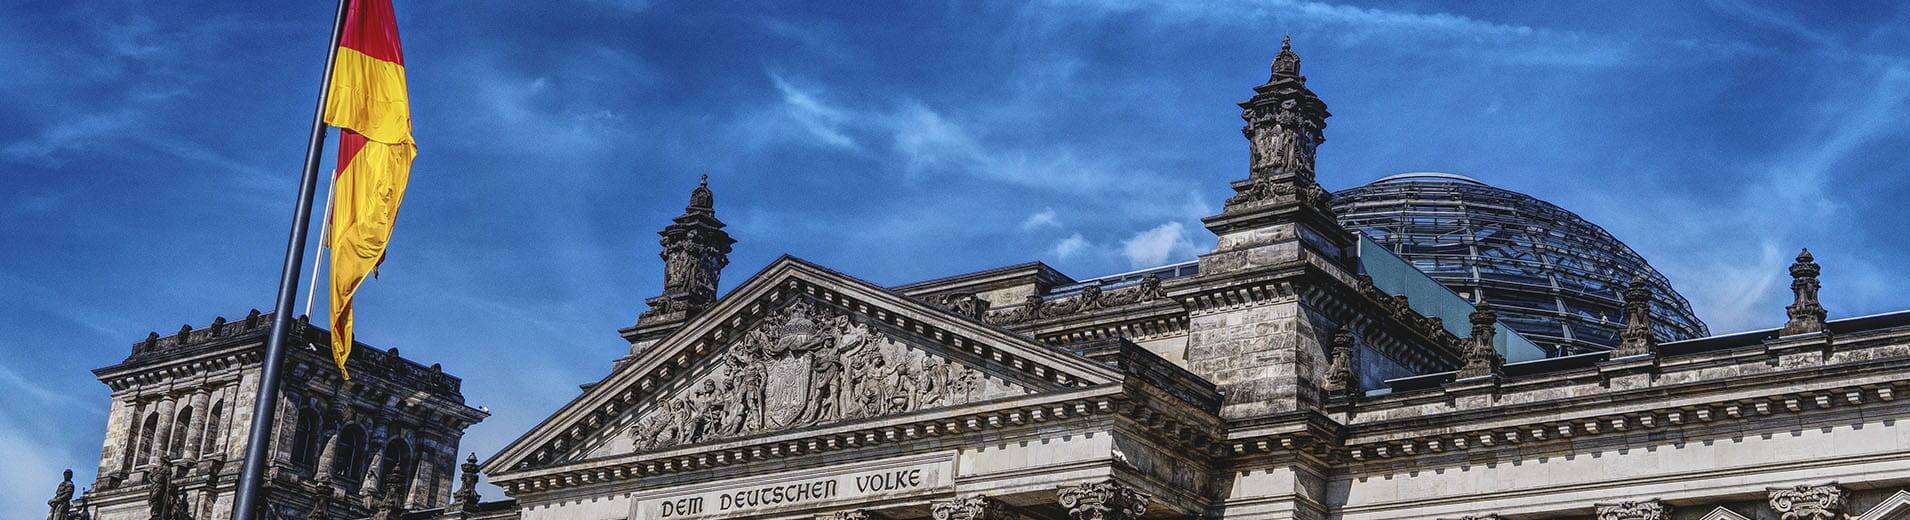 Reichstag_building_L_2344(1)